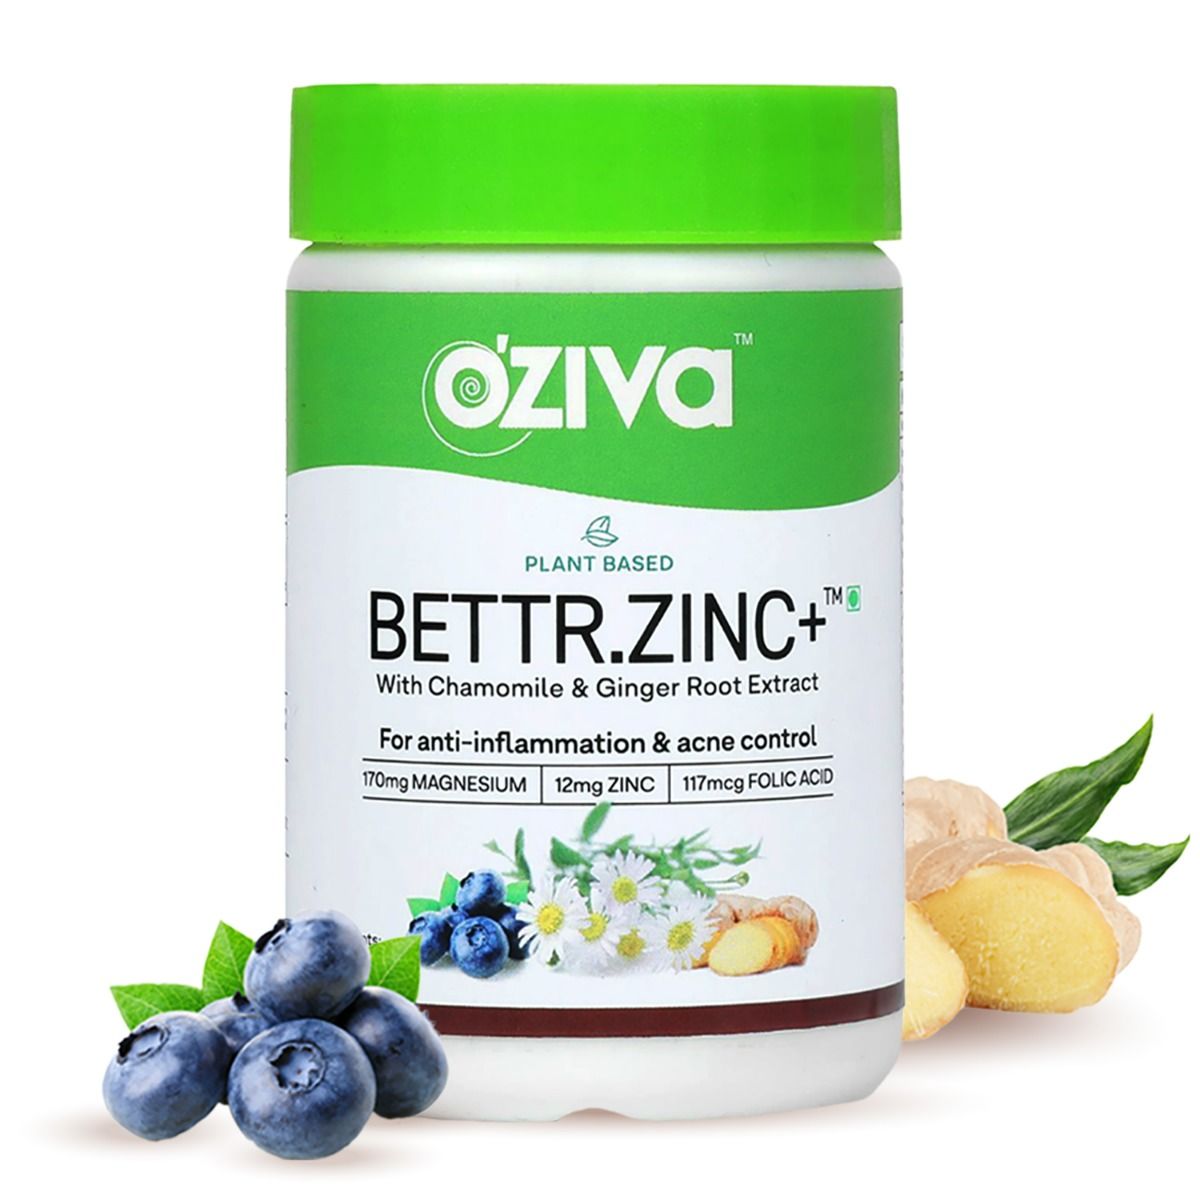 OZiva Plant Based Bettr.Zinc+, 60 Capsules, Pack of 1 